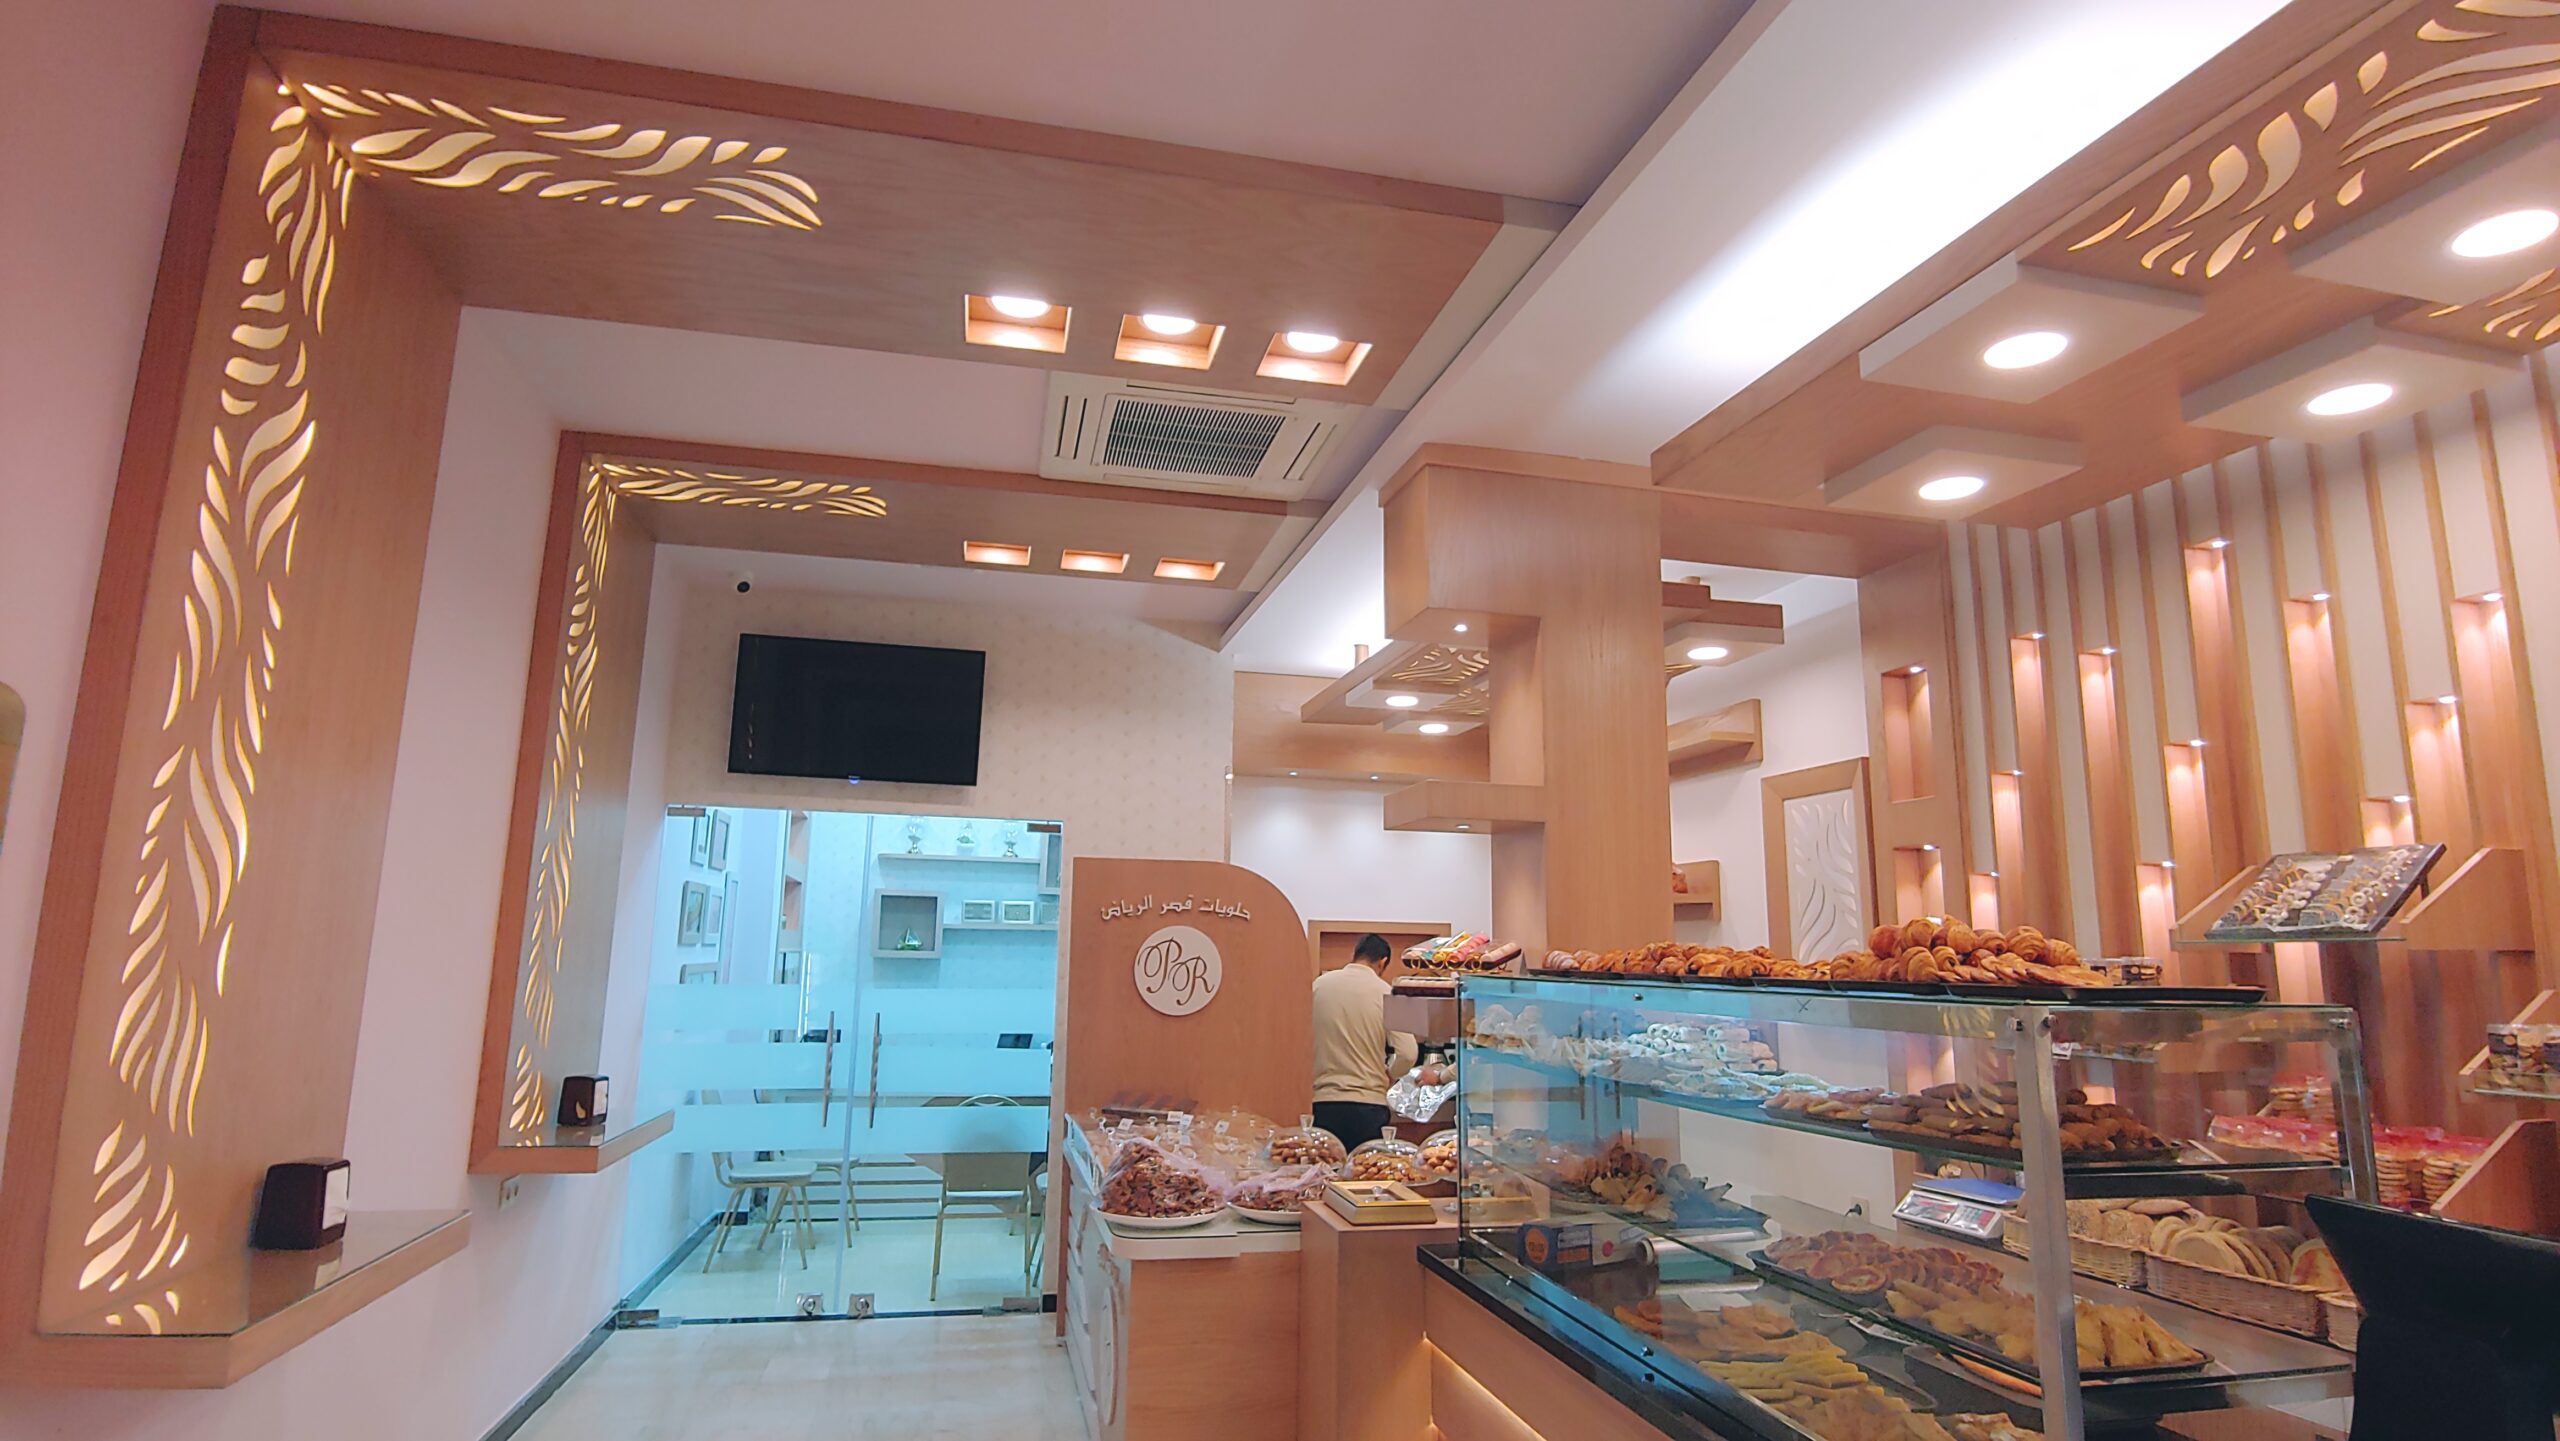 Pâtisserie Riyad Pâtisserie Riyad Salons marocains Salles à manger Pergolas Portes Cuisine Hôtels, restaurants & locaux commerciaux